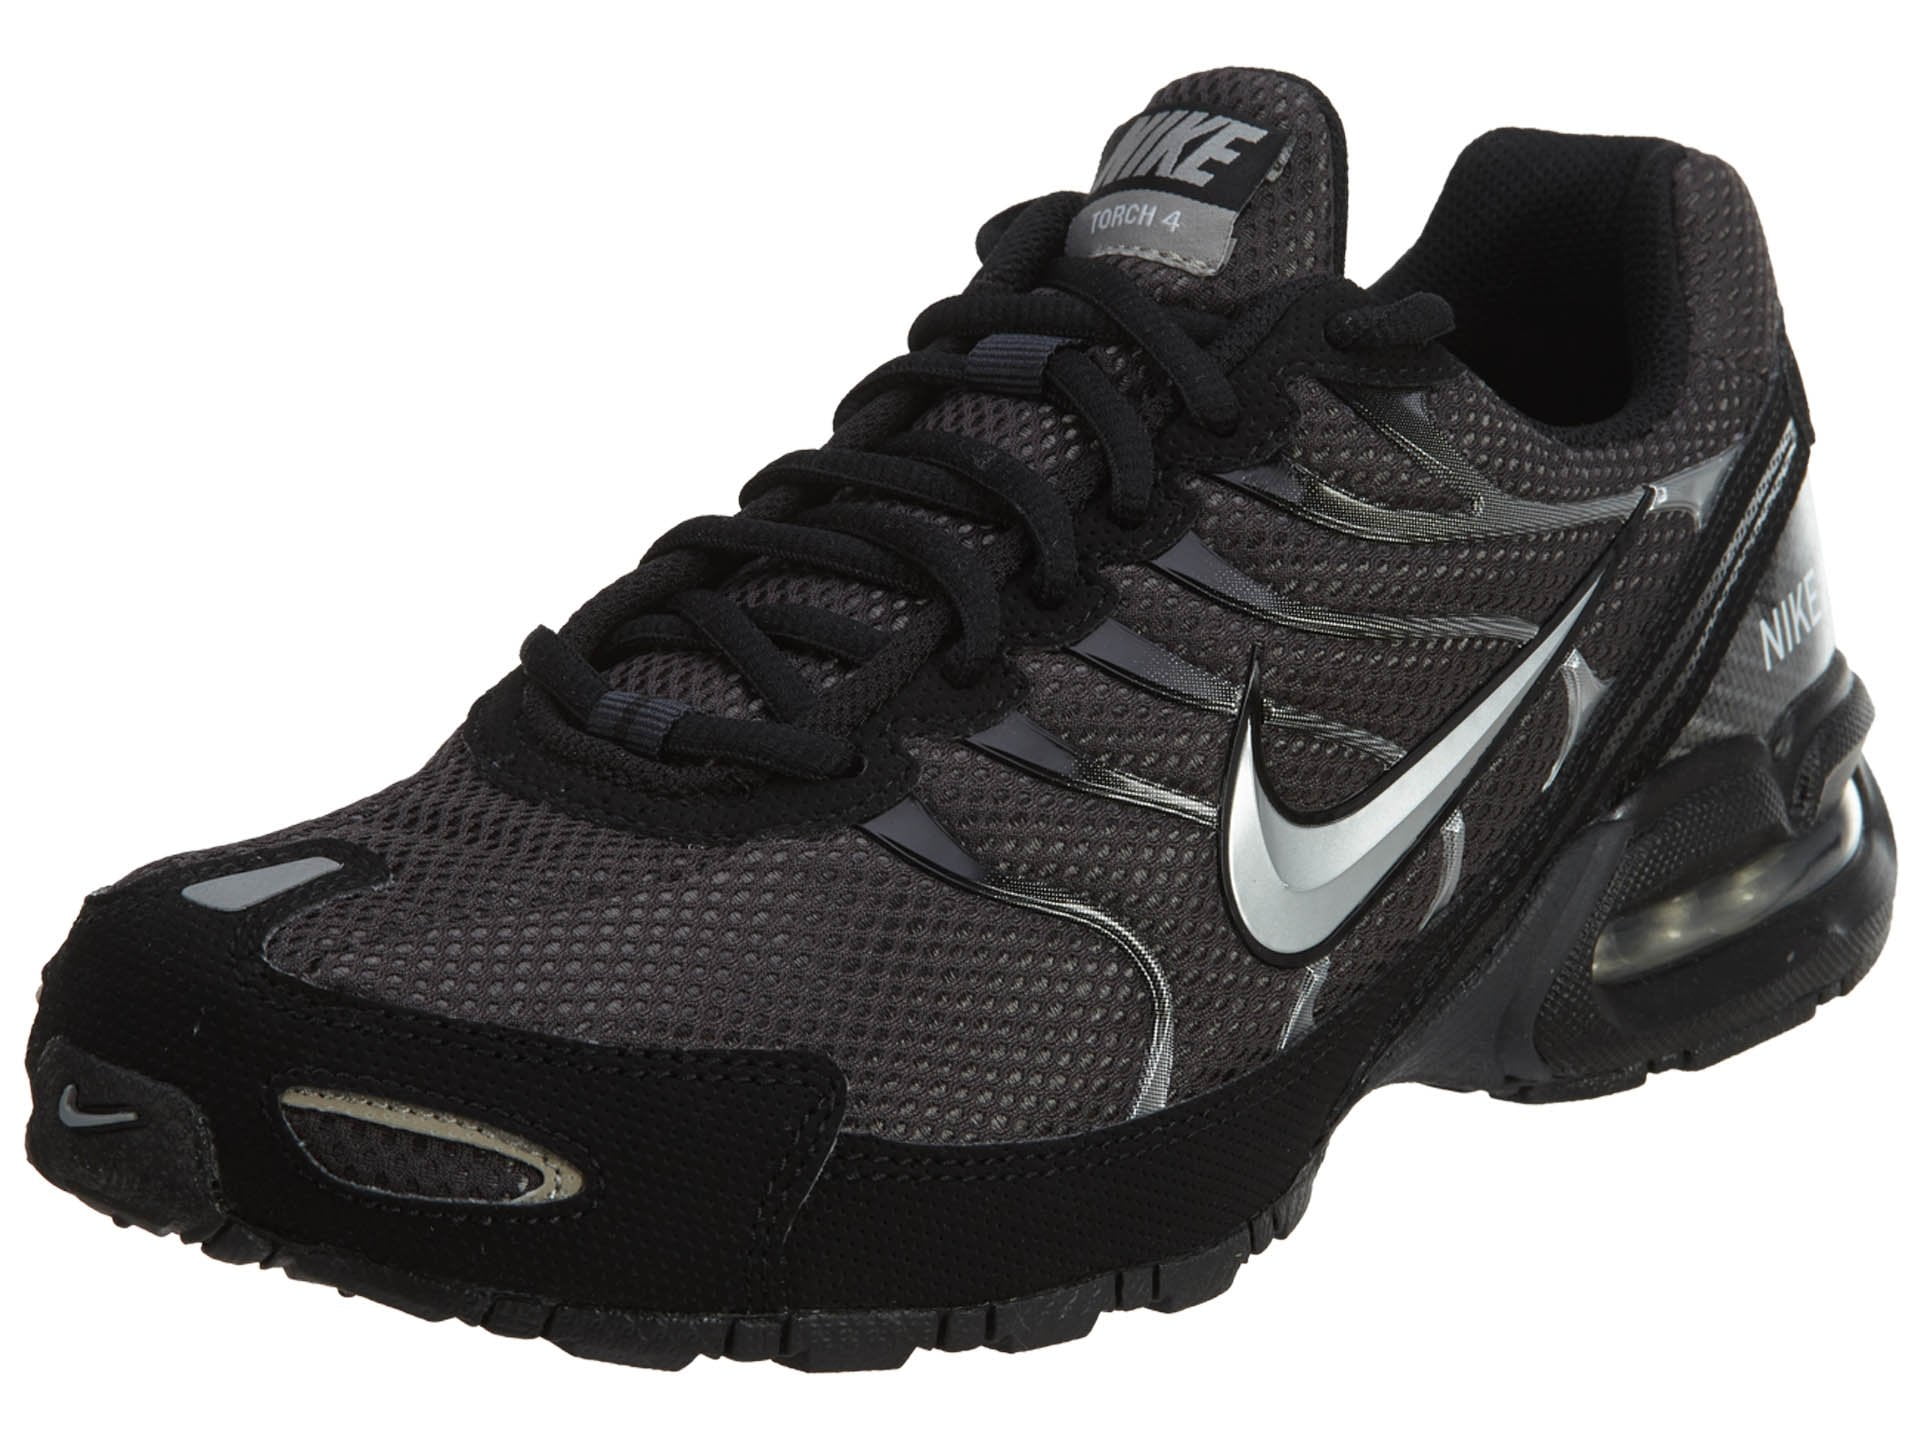 Descendencia hoy Rico Nike Men's Air Max Torch 4 Running Shoe #343846-002, Anthracite/Metallic  Silver-black, 9 D(M) US - Walmart.com